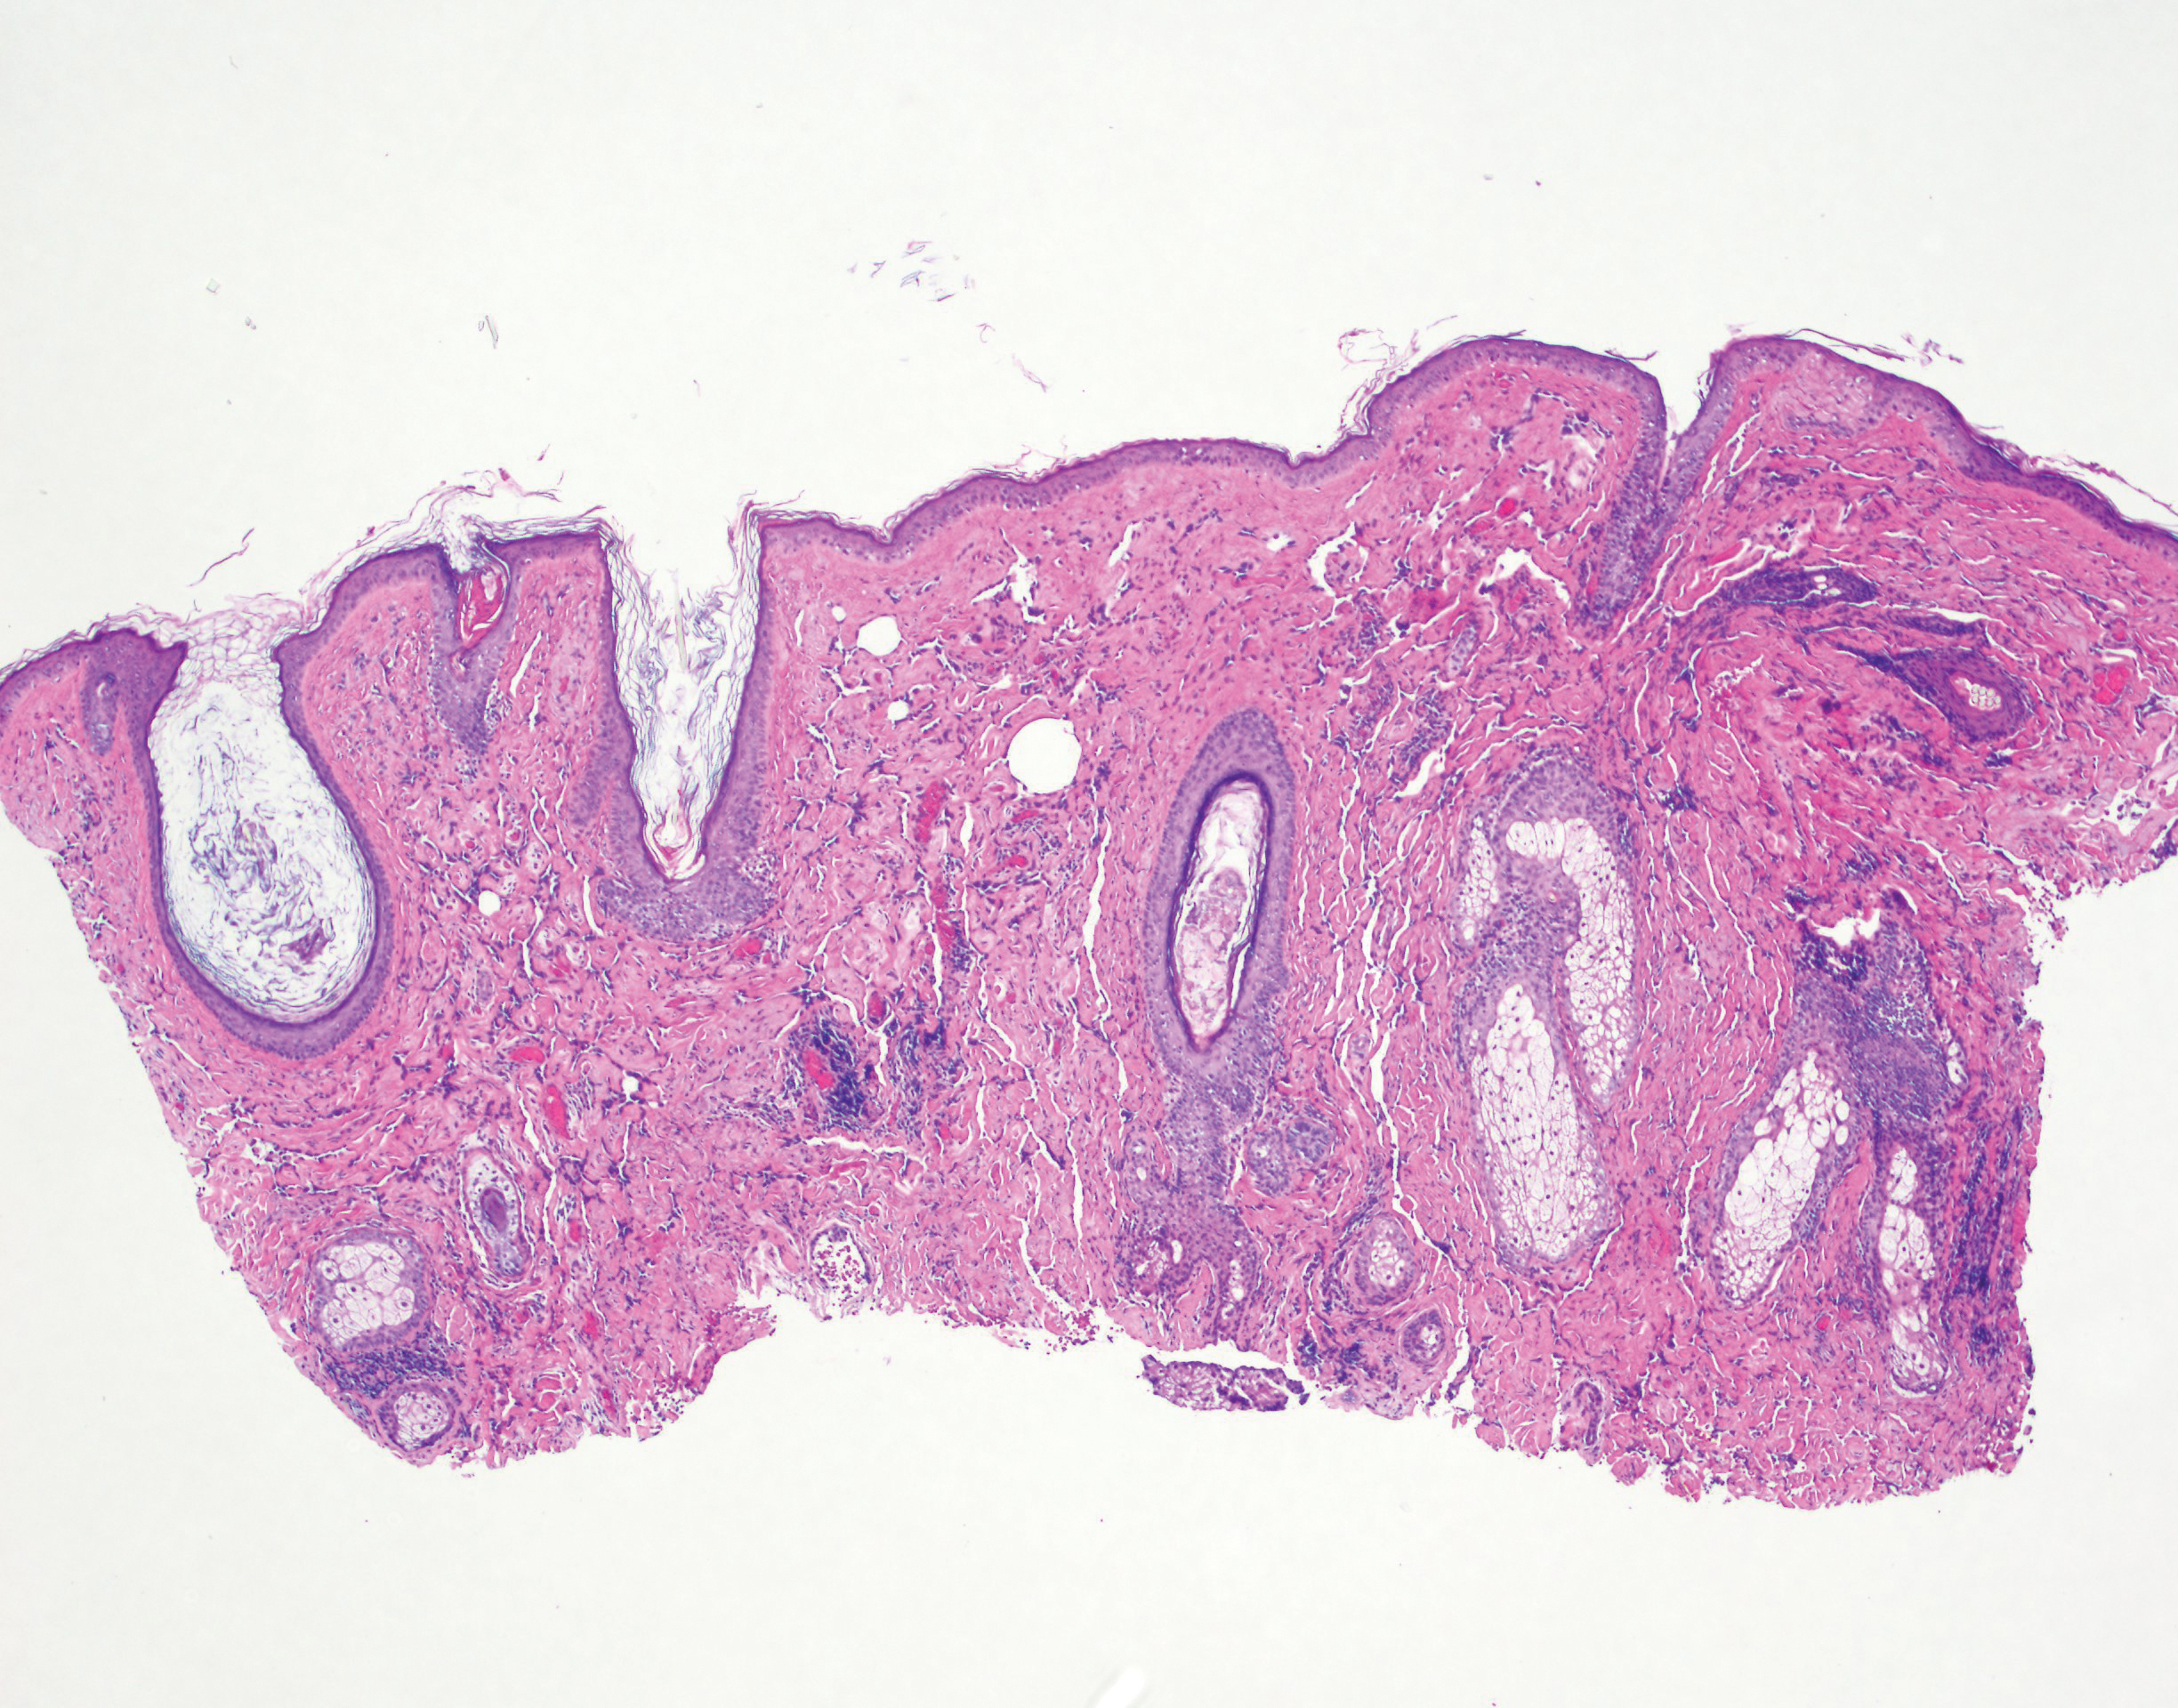 morpheaform basal cell carcinoma histology